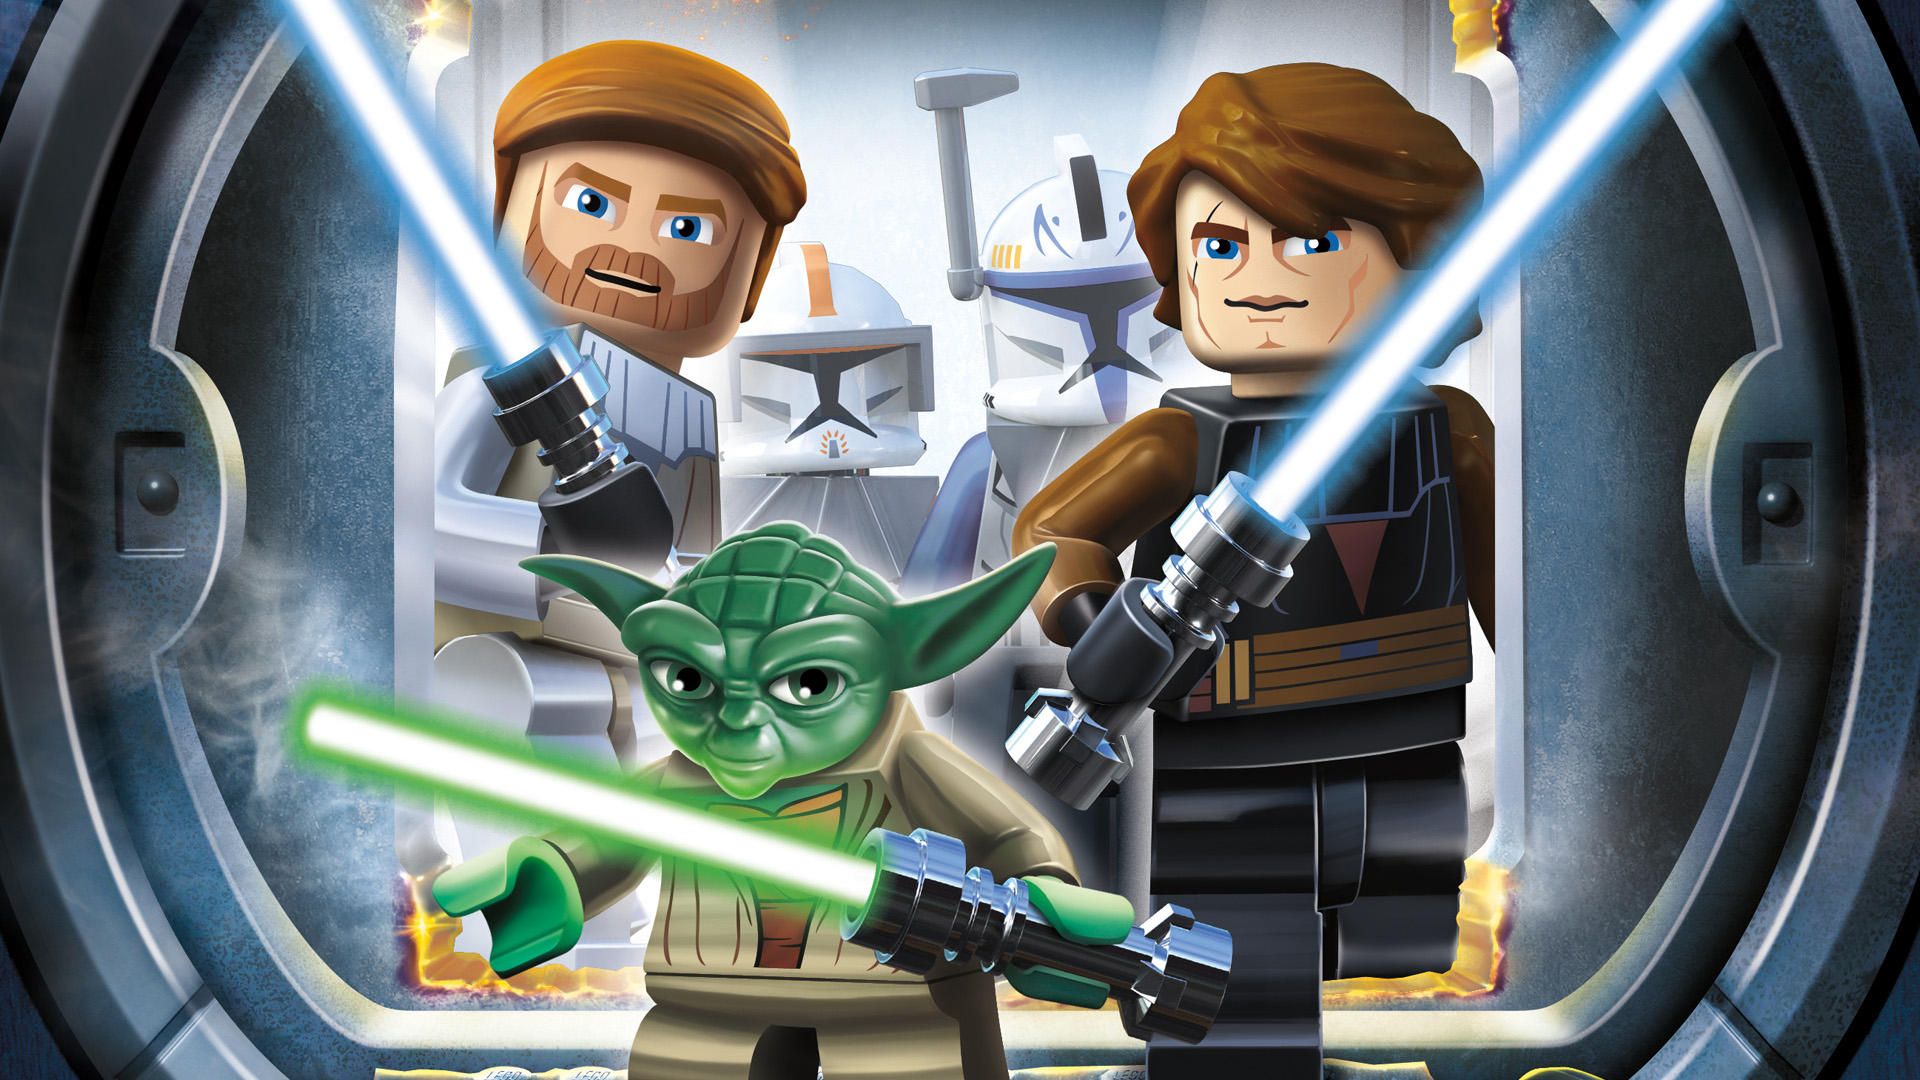 Lego Star Wars Iii The Clone HD Wallpaper Background Image